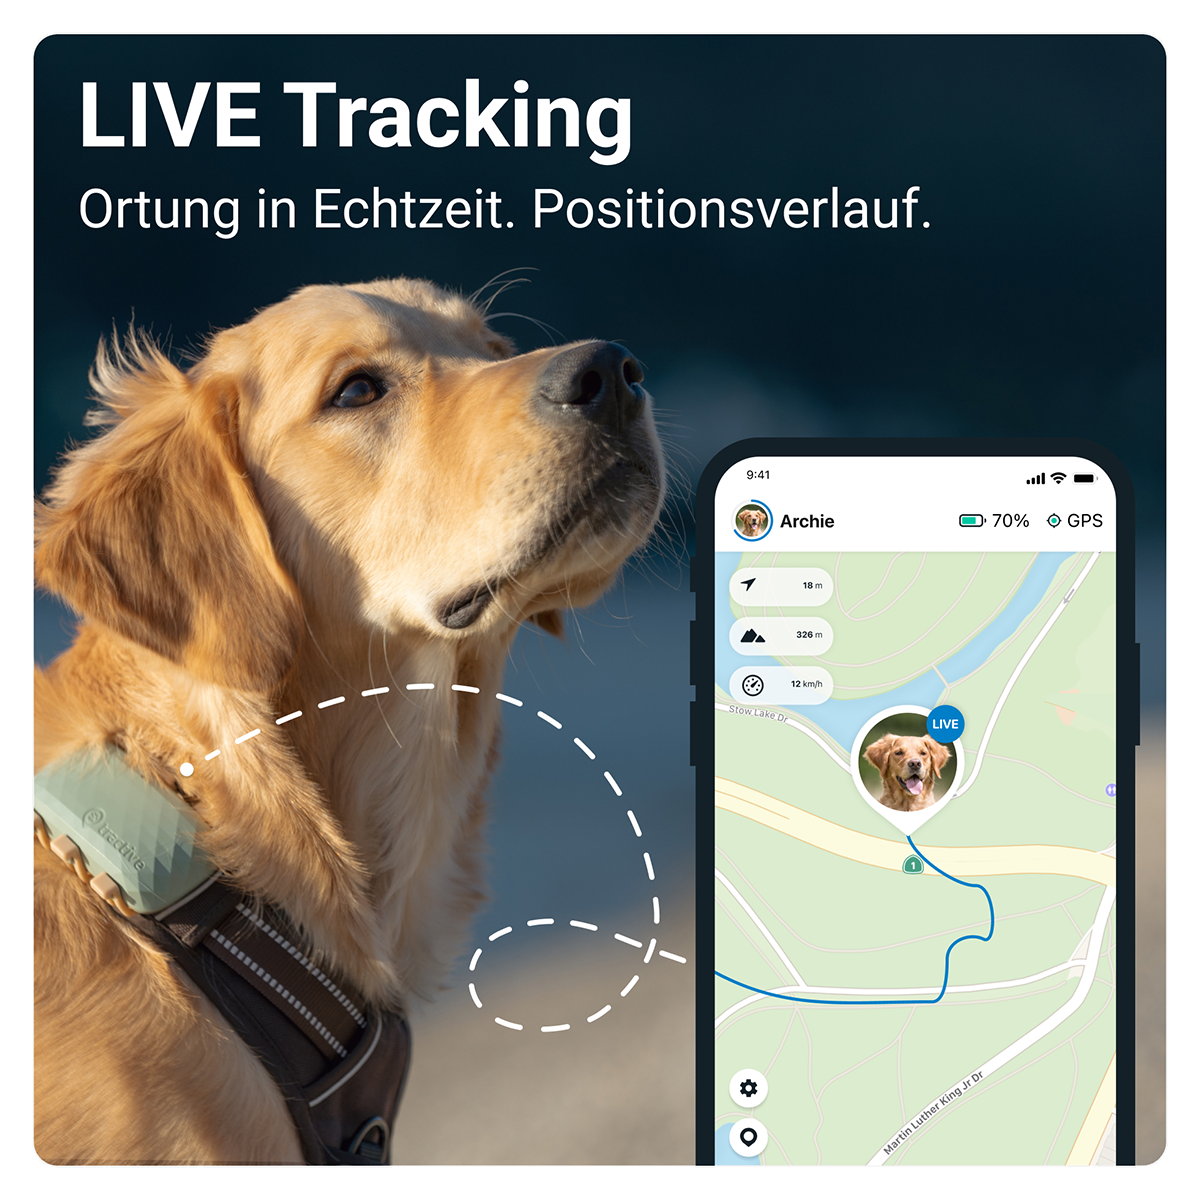 GPS Tracker TRACTIVE DOG XL